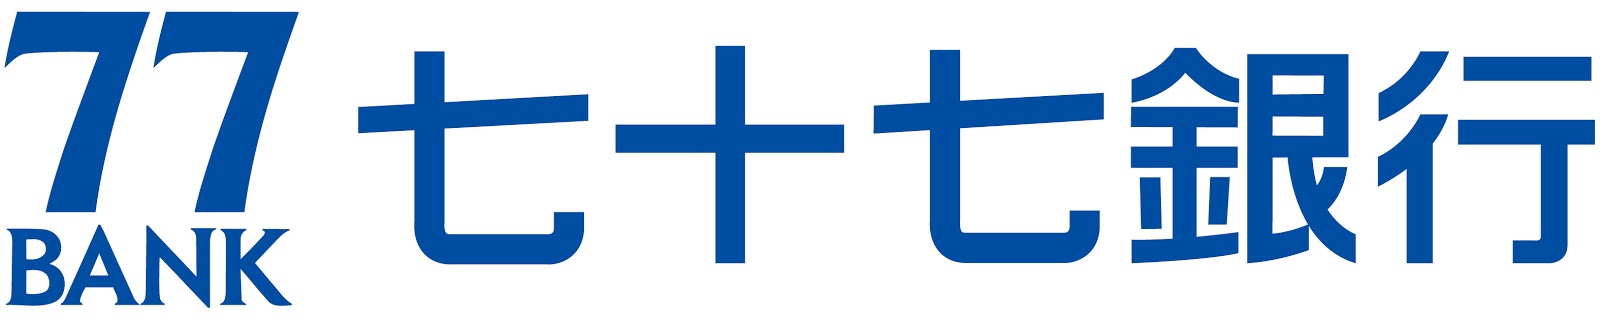 77 Bank Brand Logo